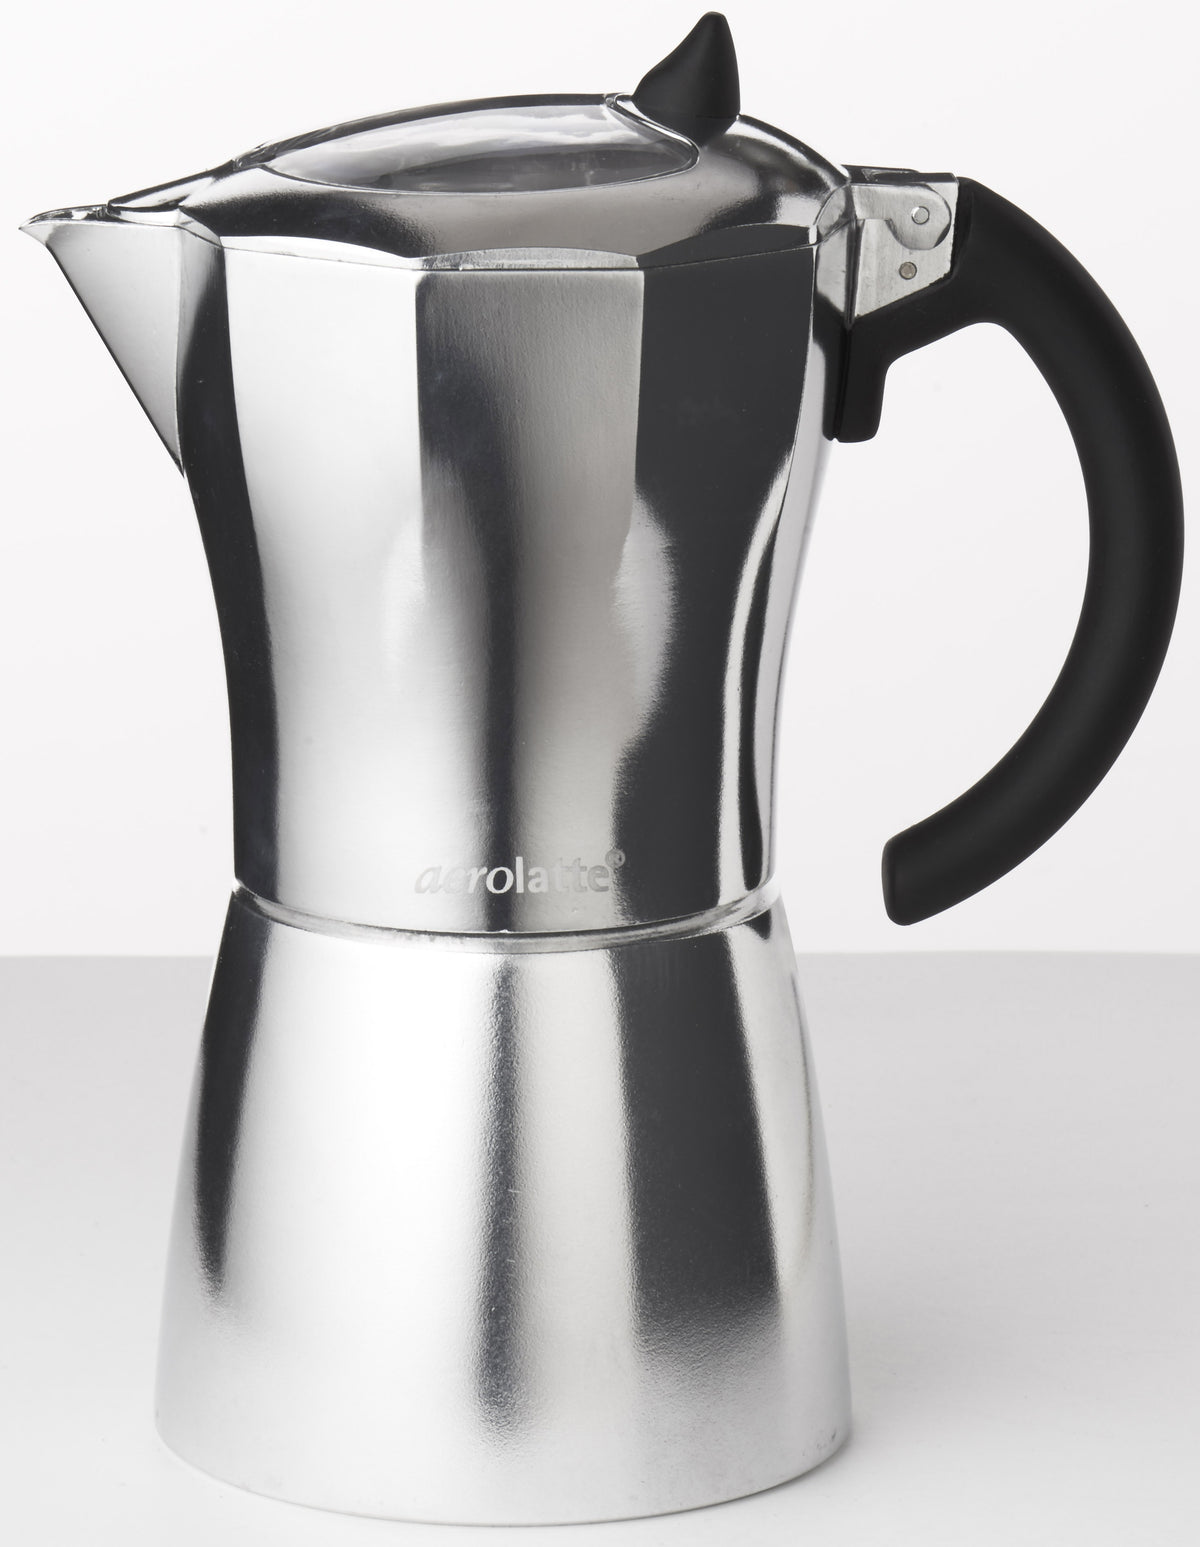 Aerolatte 0076 MokaVista Espresso Pot Coffee Maker, 6 Cup Capacity